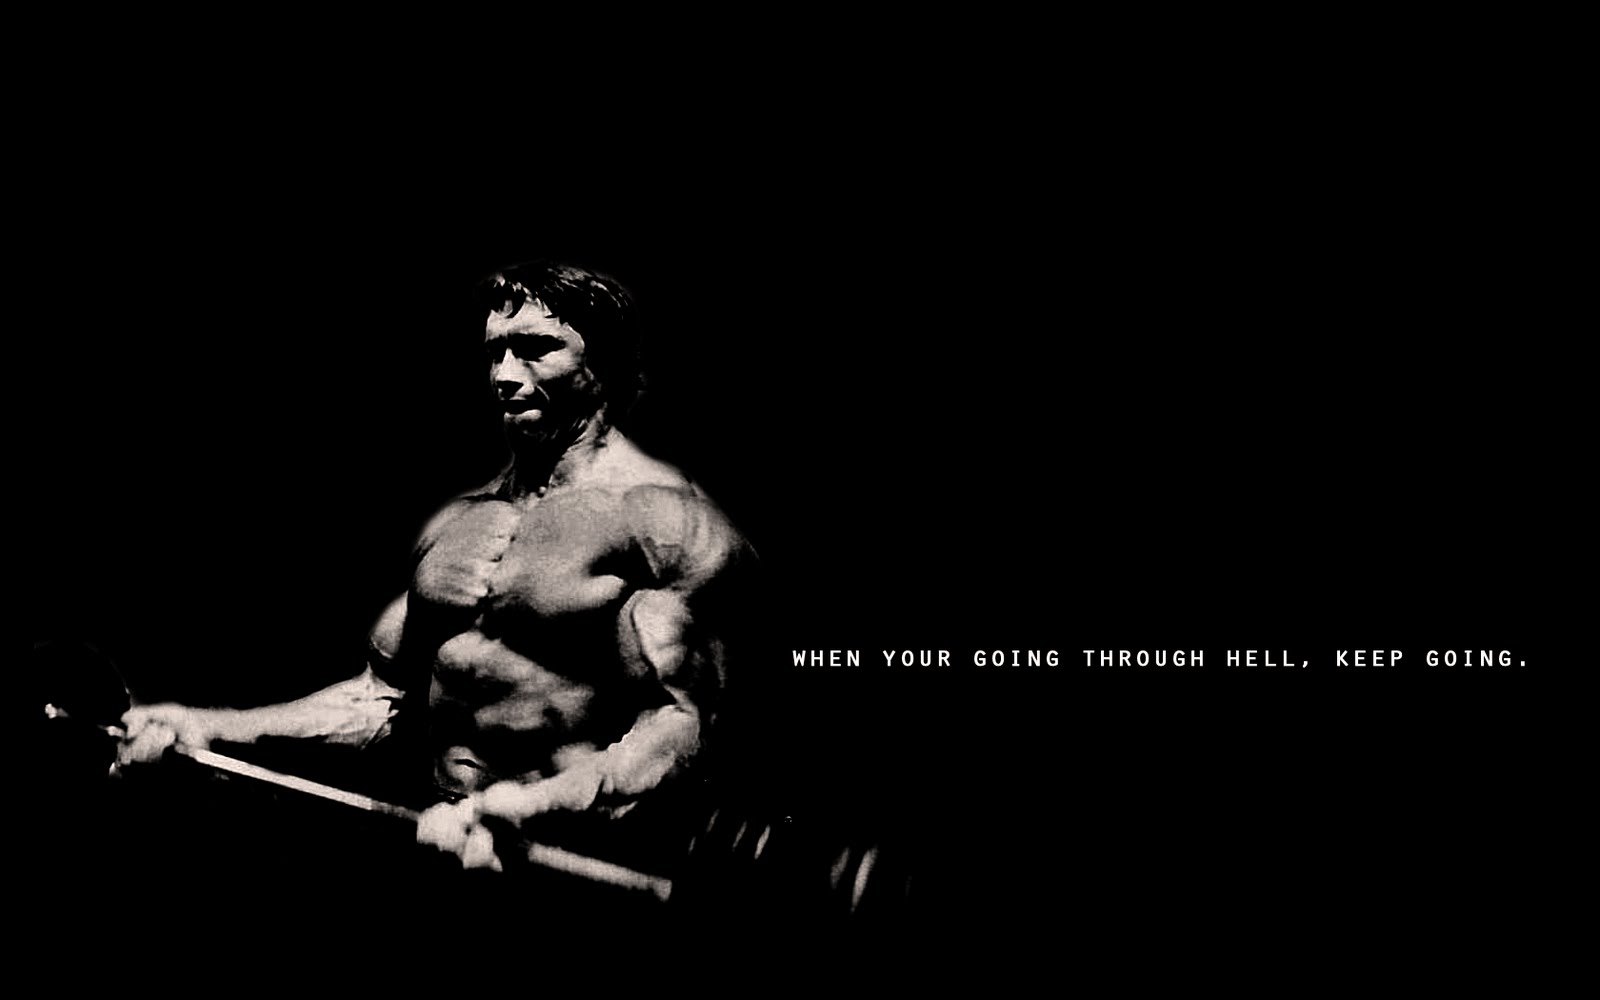 50+] Arnold Motivational Wallpapers - WallpaperSafari